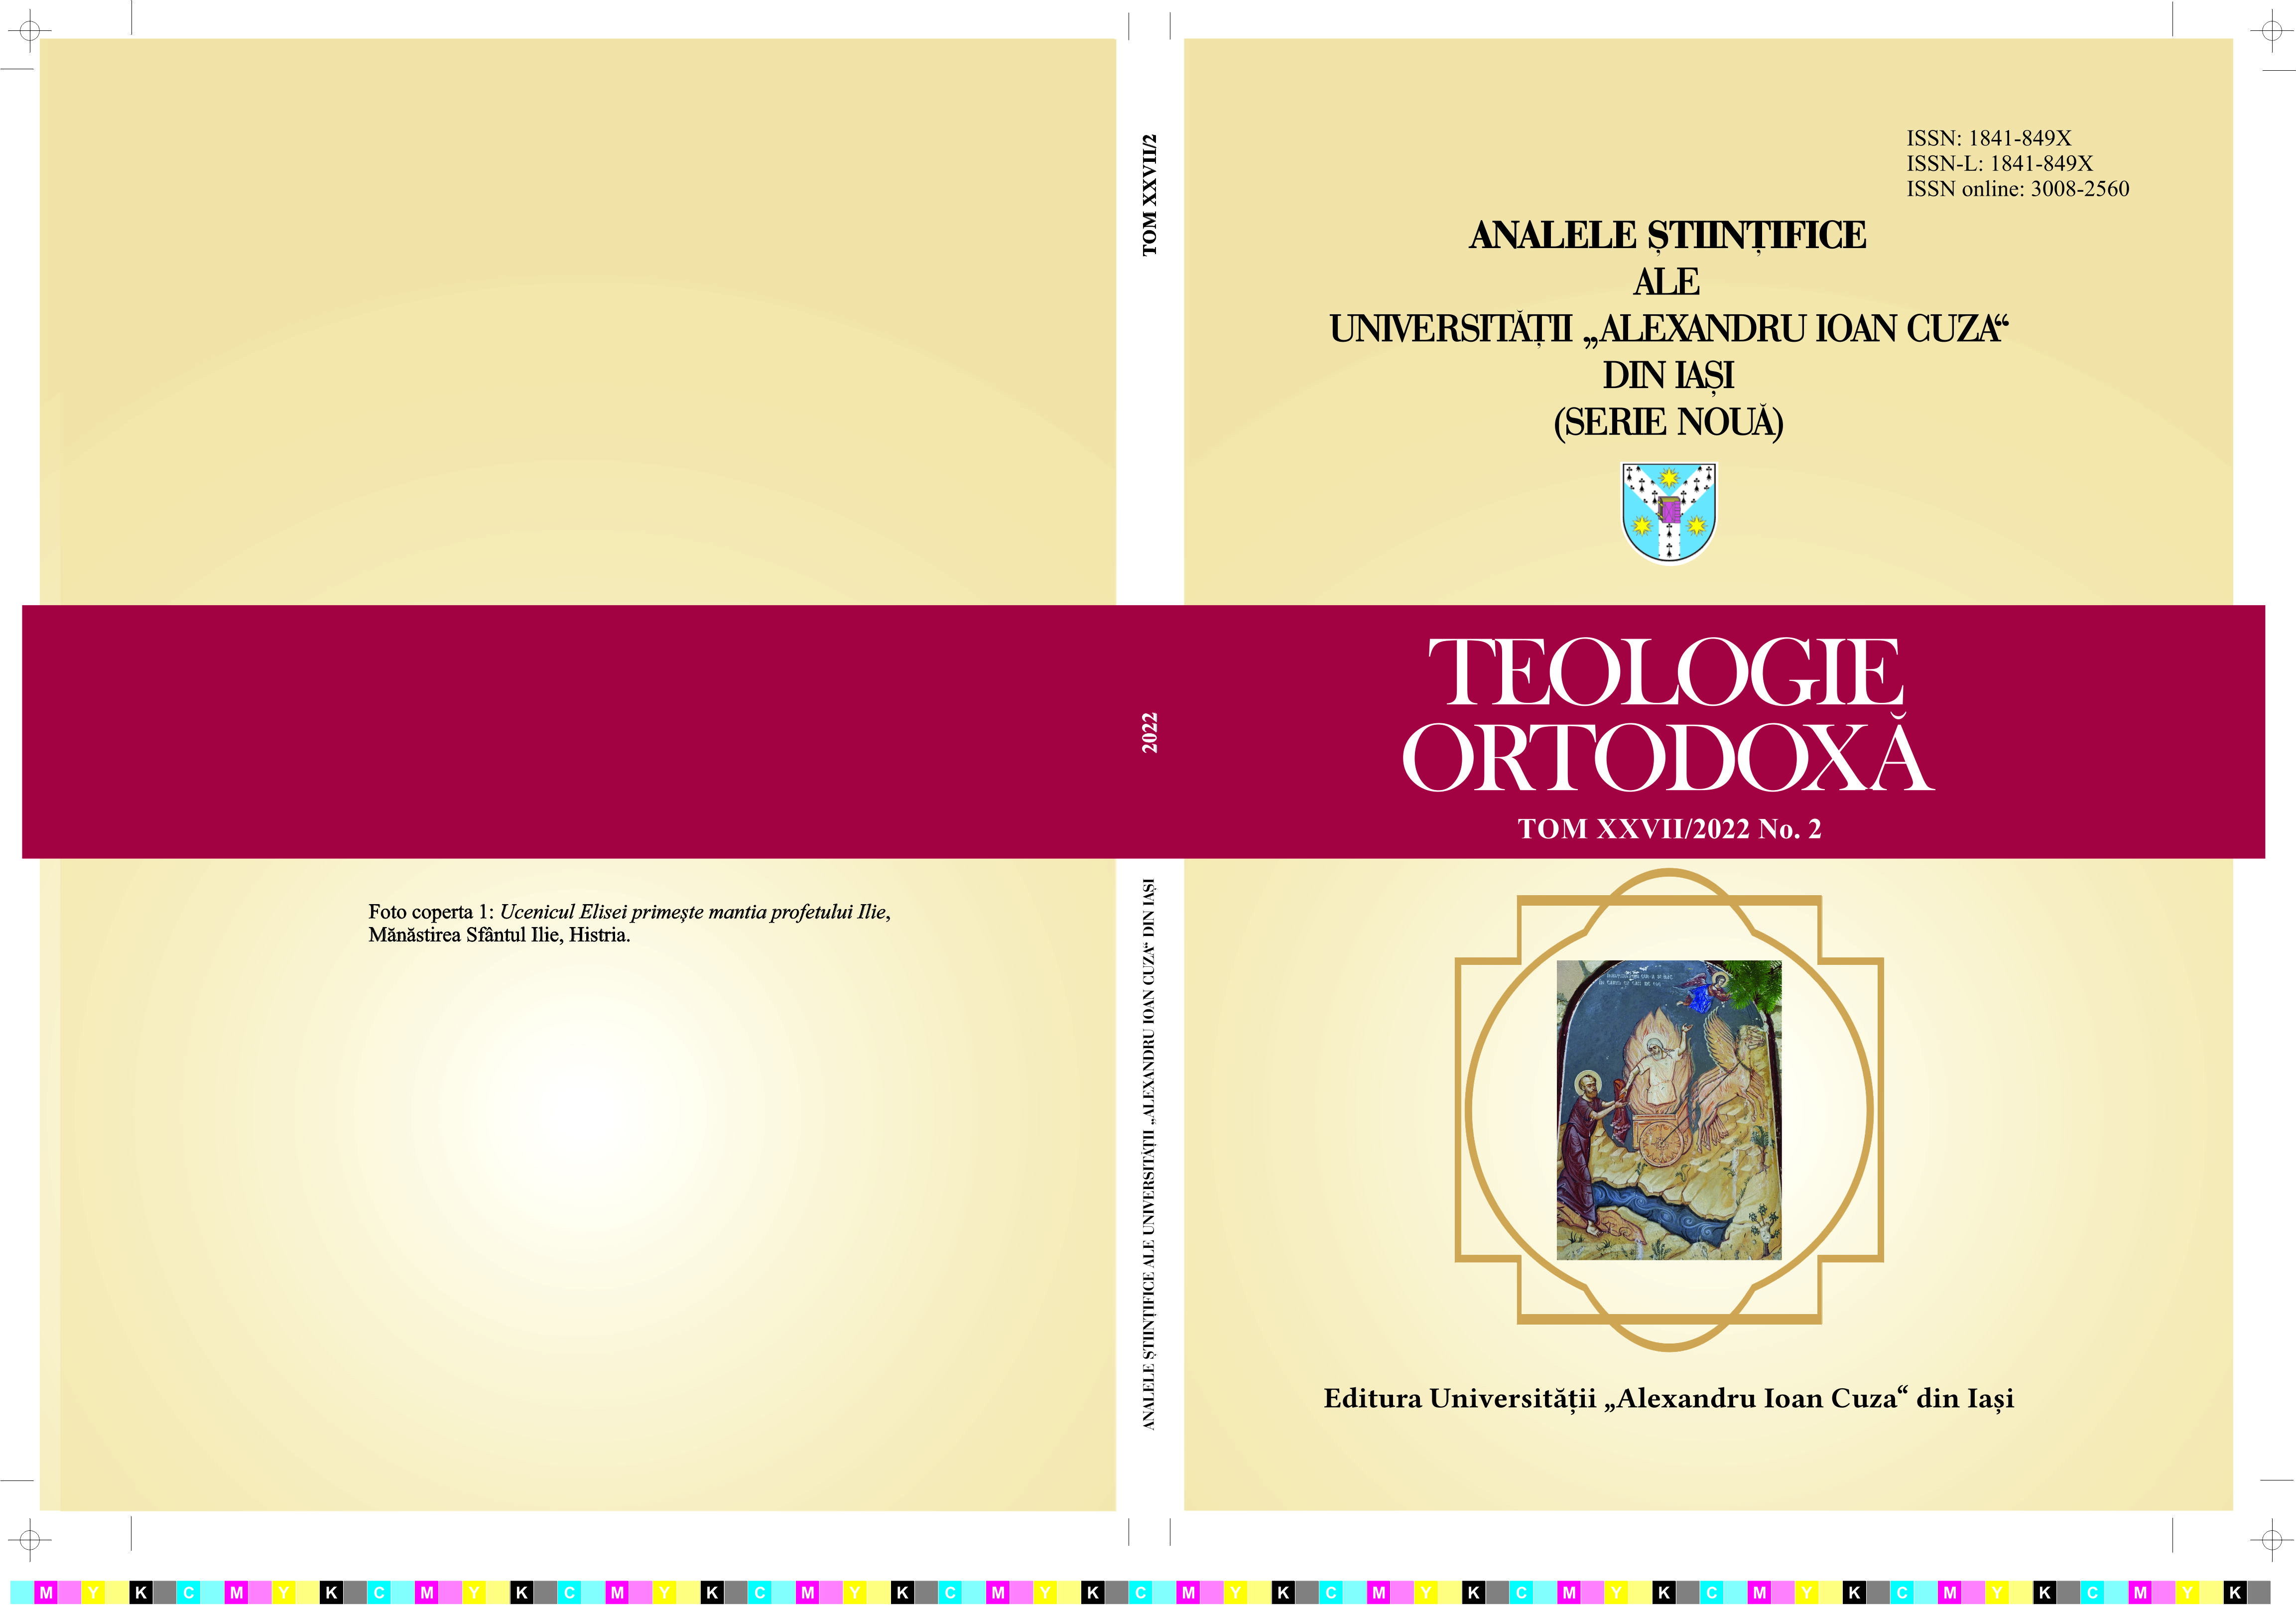 The Romanian Orthodox Deanery of Chişinău-Criş (1765-1918). Attestation and evolution